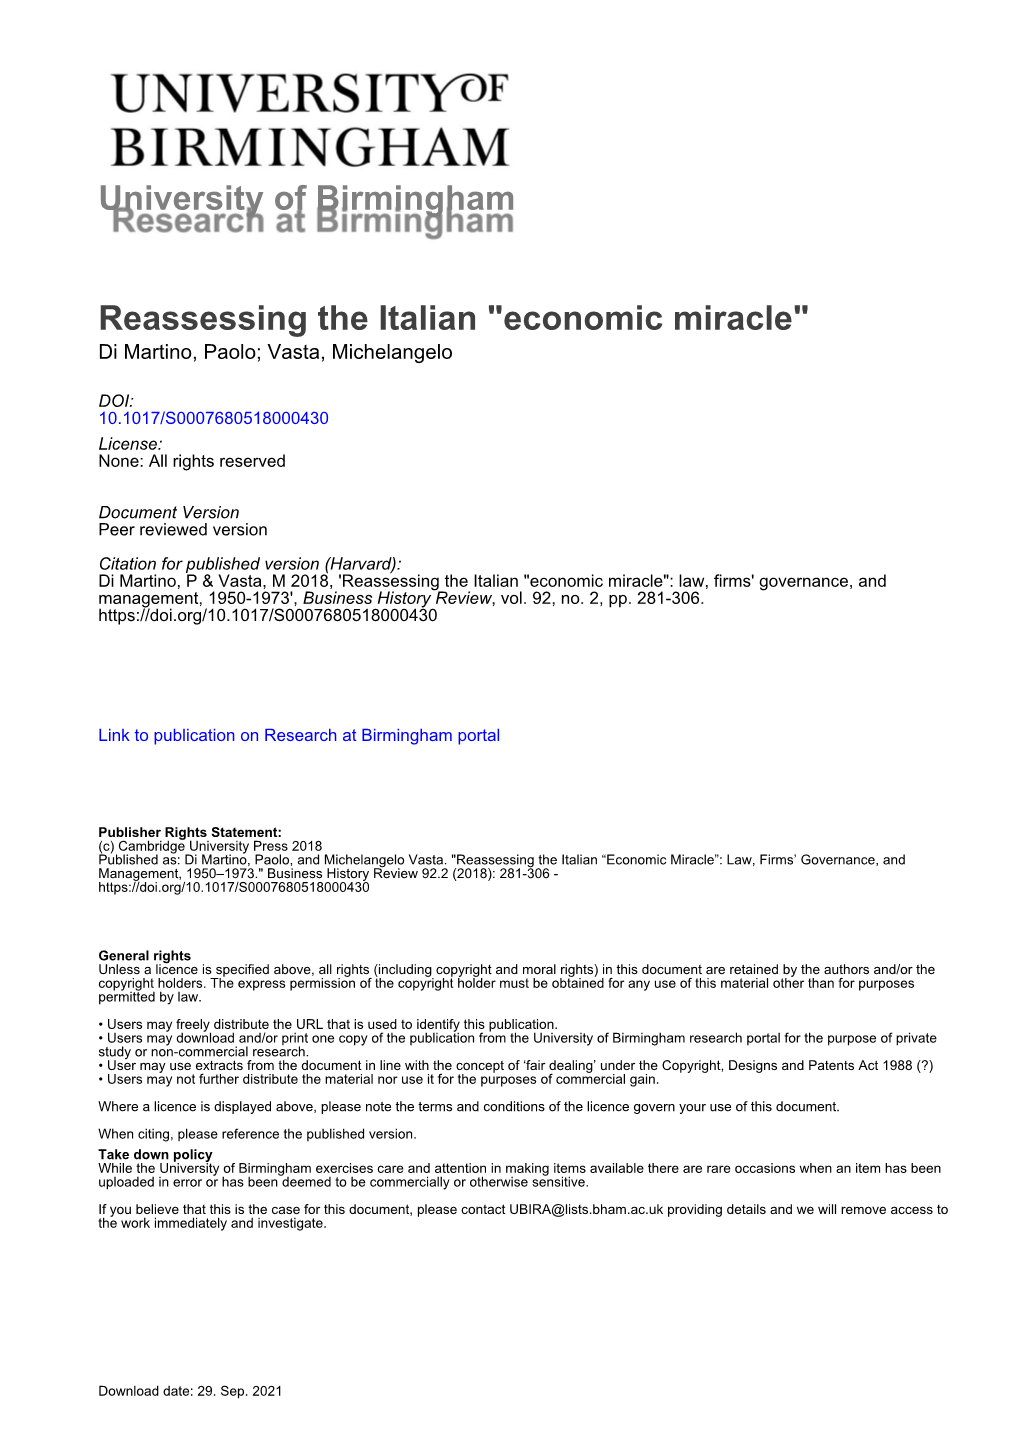 Reassessing the Italian "Economic Miracle" Di Martino, Paolo; Vasta, Michelangelo